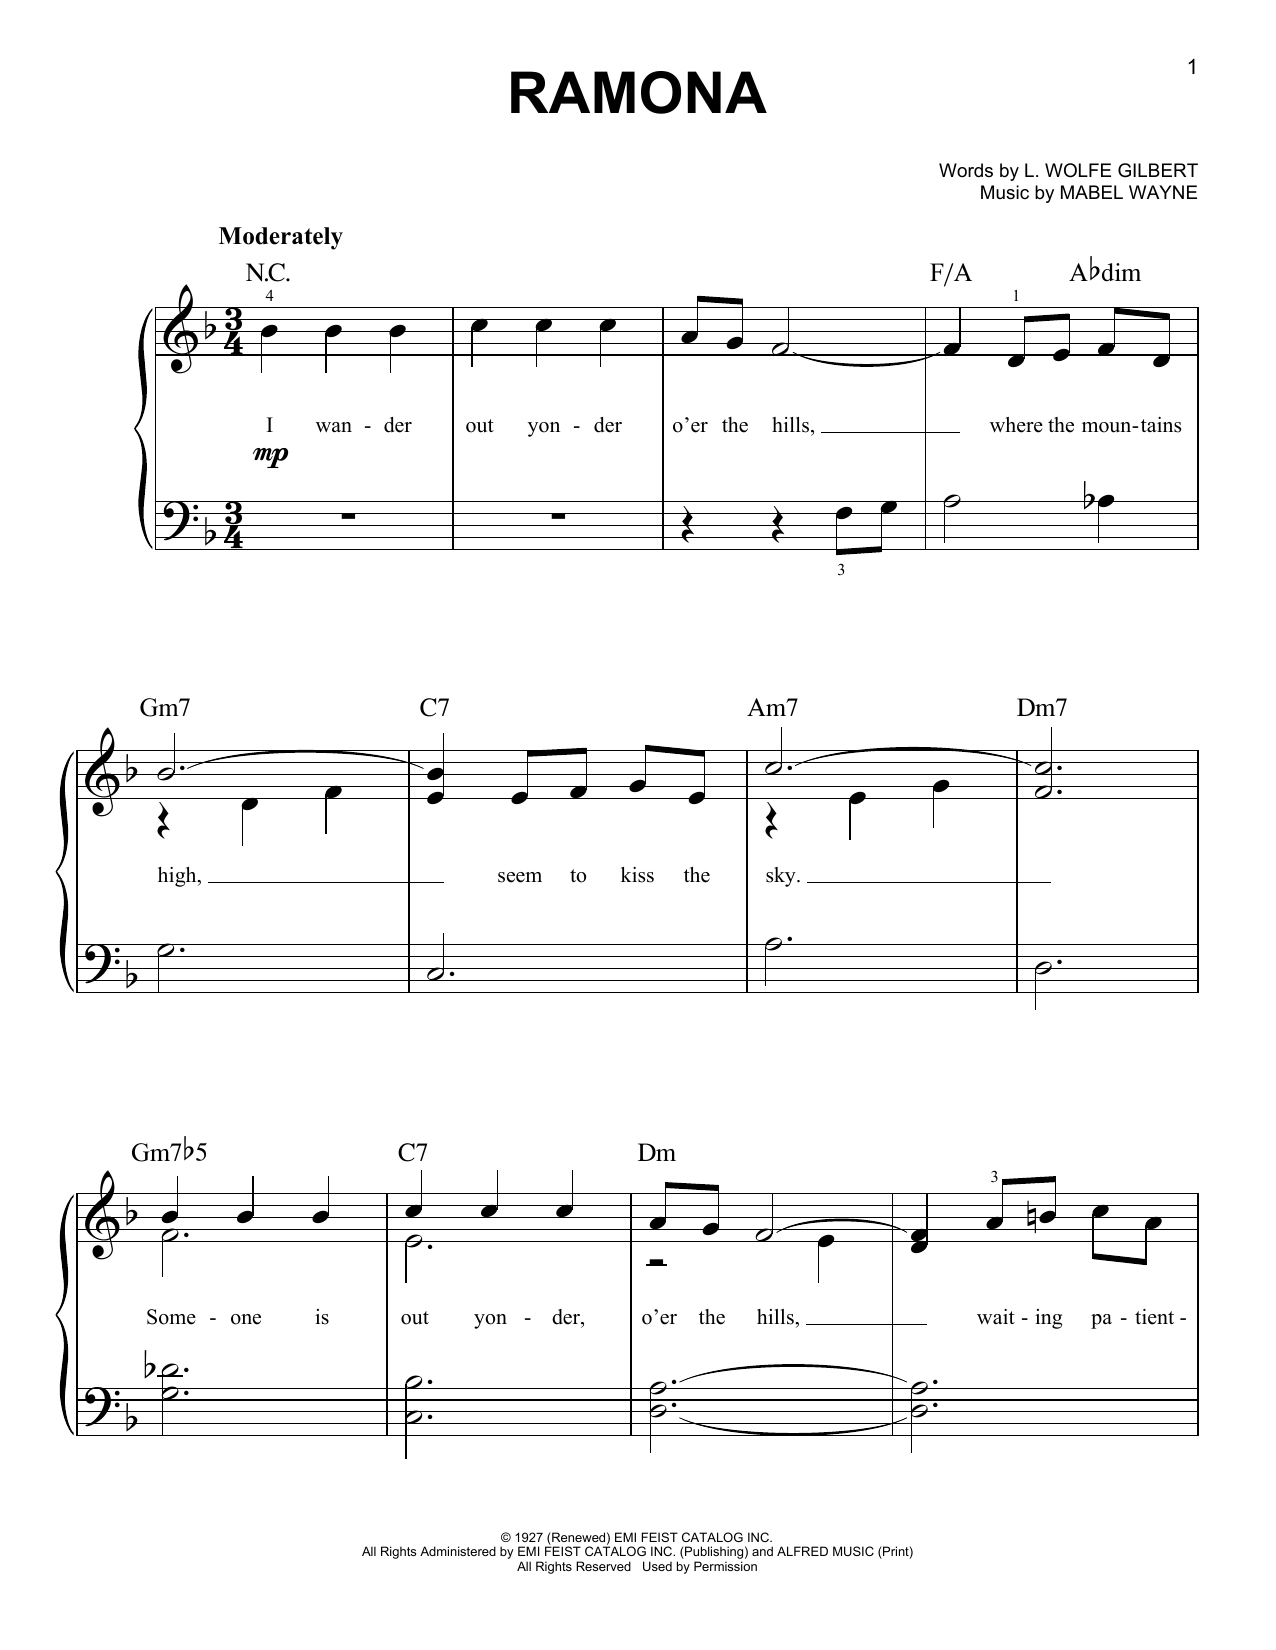 Mabel Wayne Ramona Sheet Music Notes & Chords for Easy Piano - Download or Print PDF